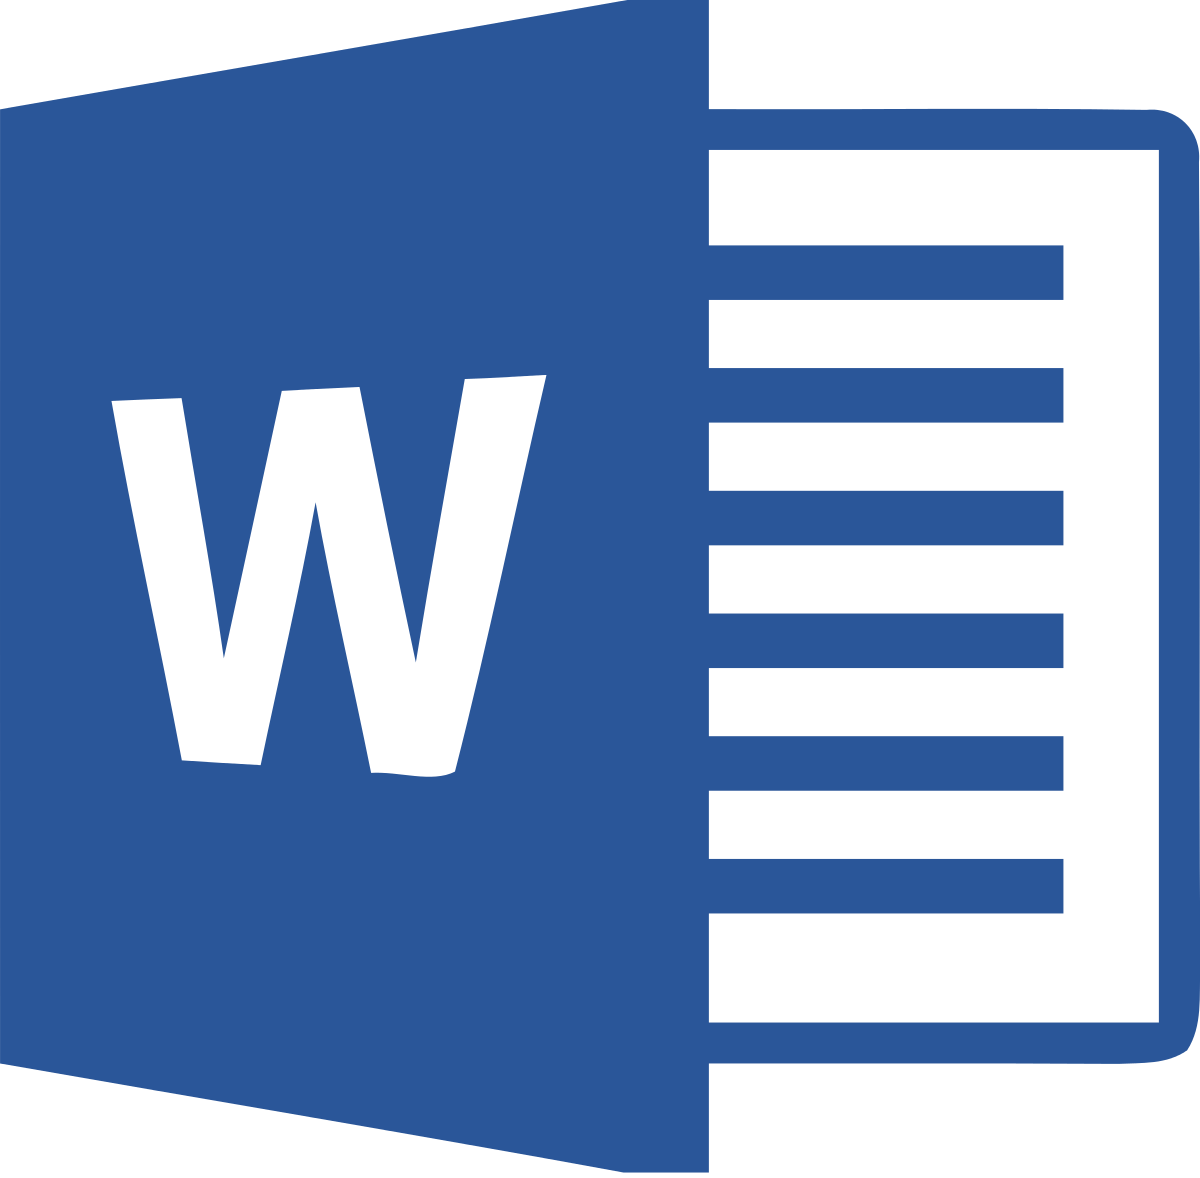 Значок ворд. Значок Microsoft Word. Логотип Word 2016. Картинки для ворда. Ярлык ворд